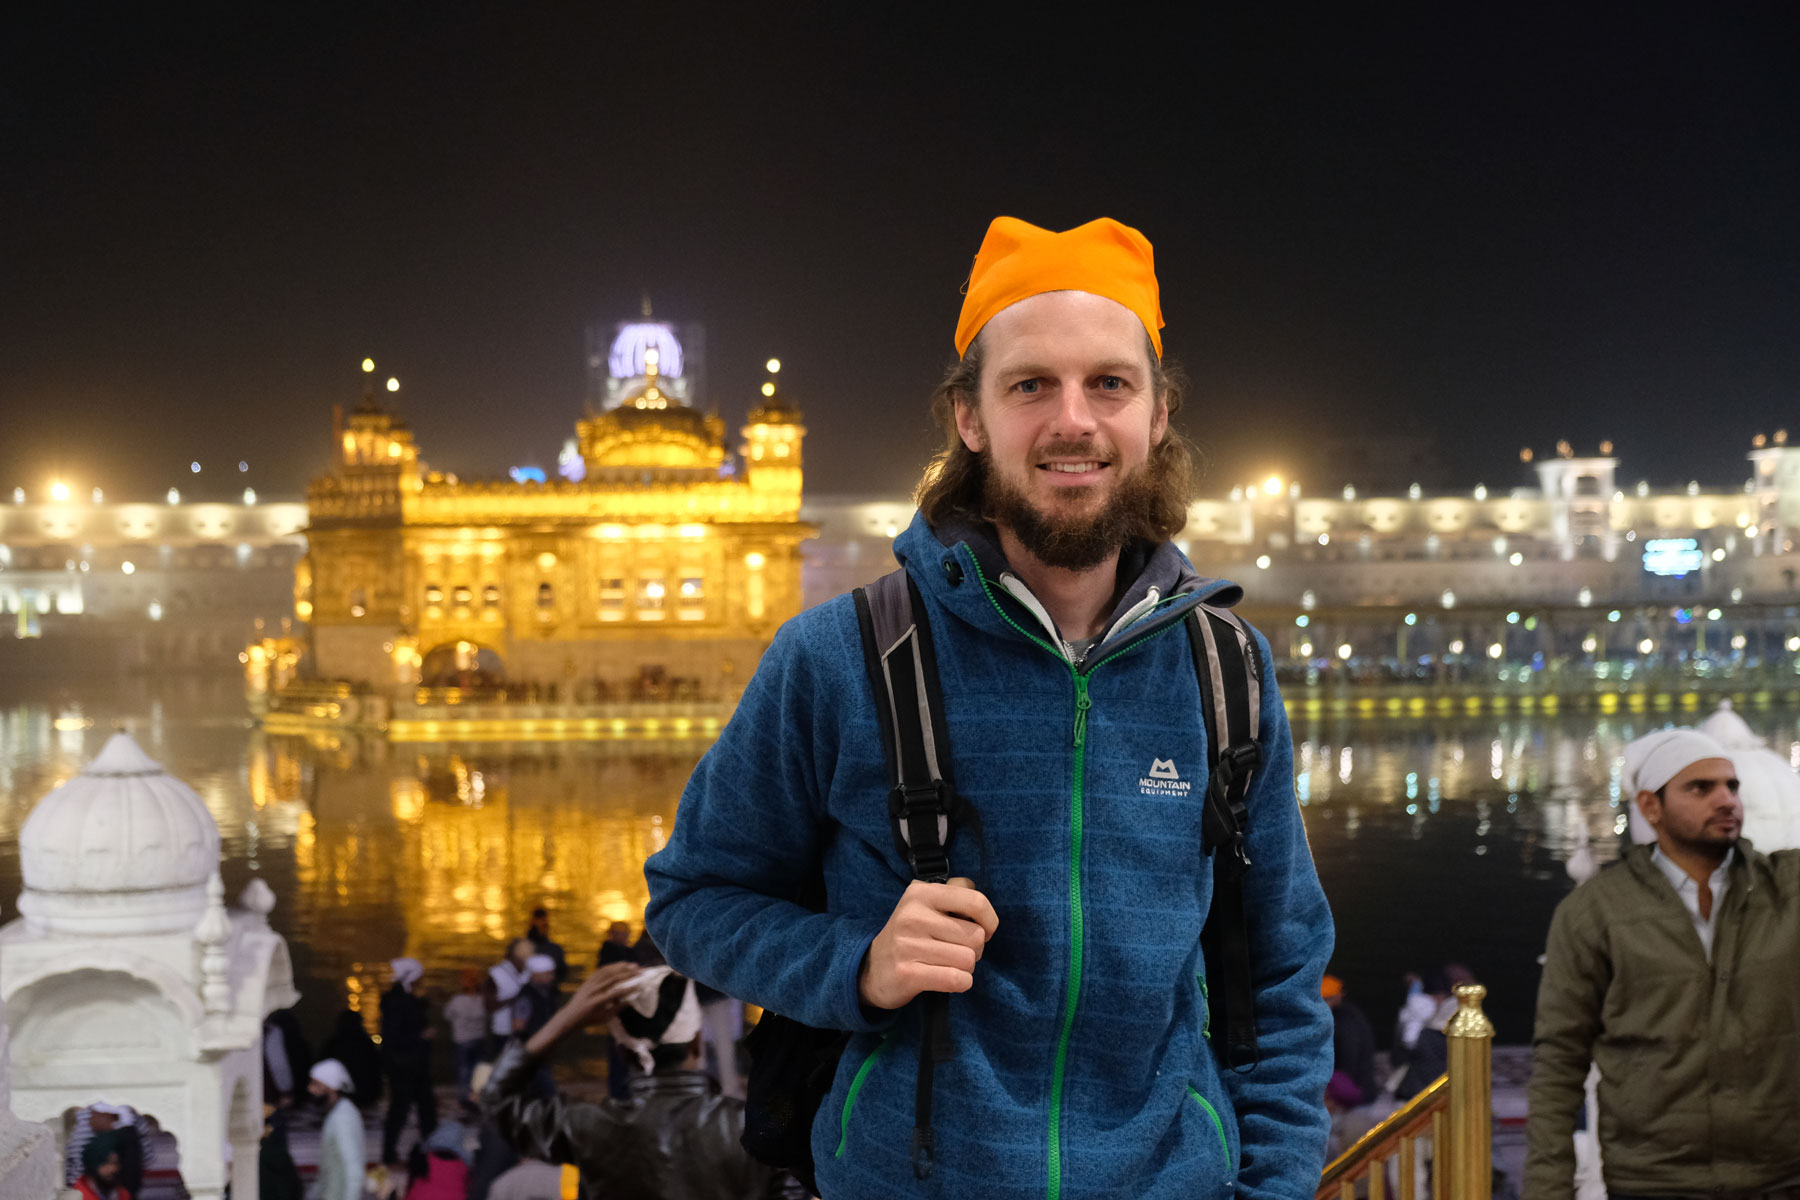 Sebastian mit orangenem Kopftuch vor dem goldenen Sikh-Tempel in Amritsar.